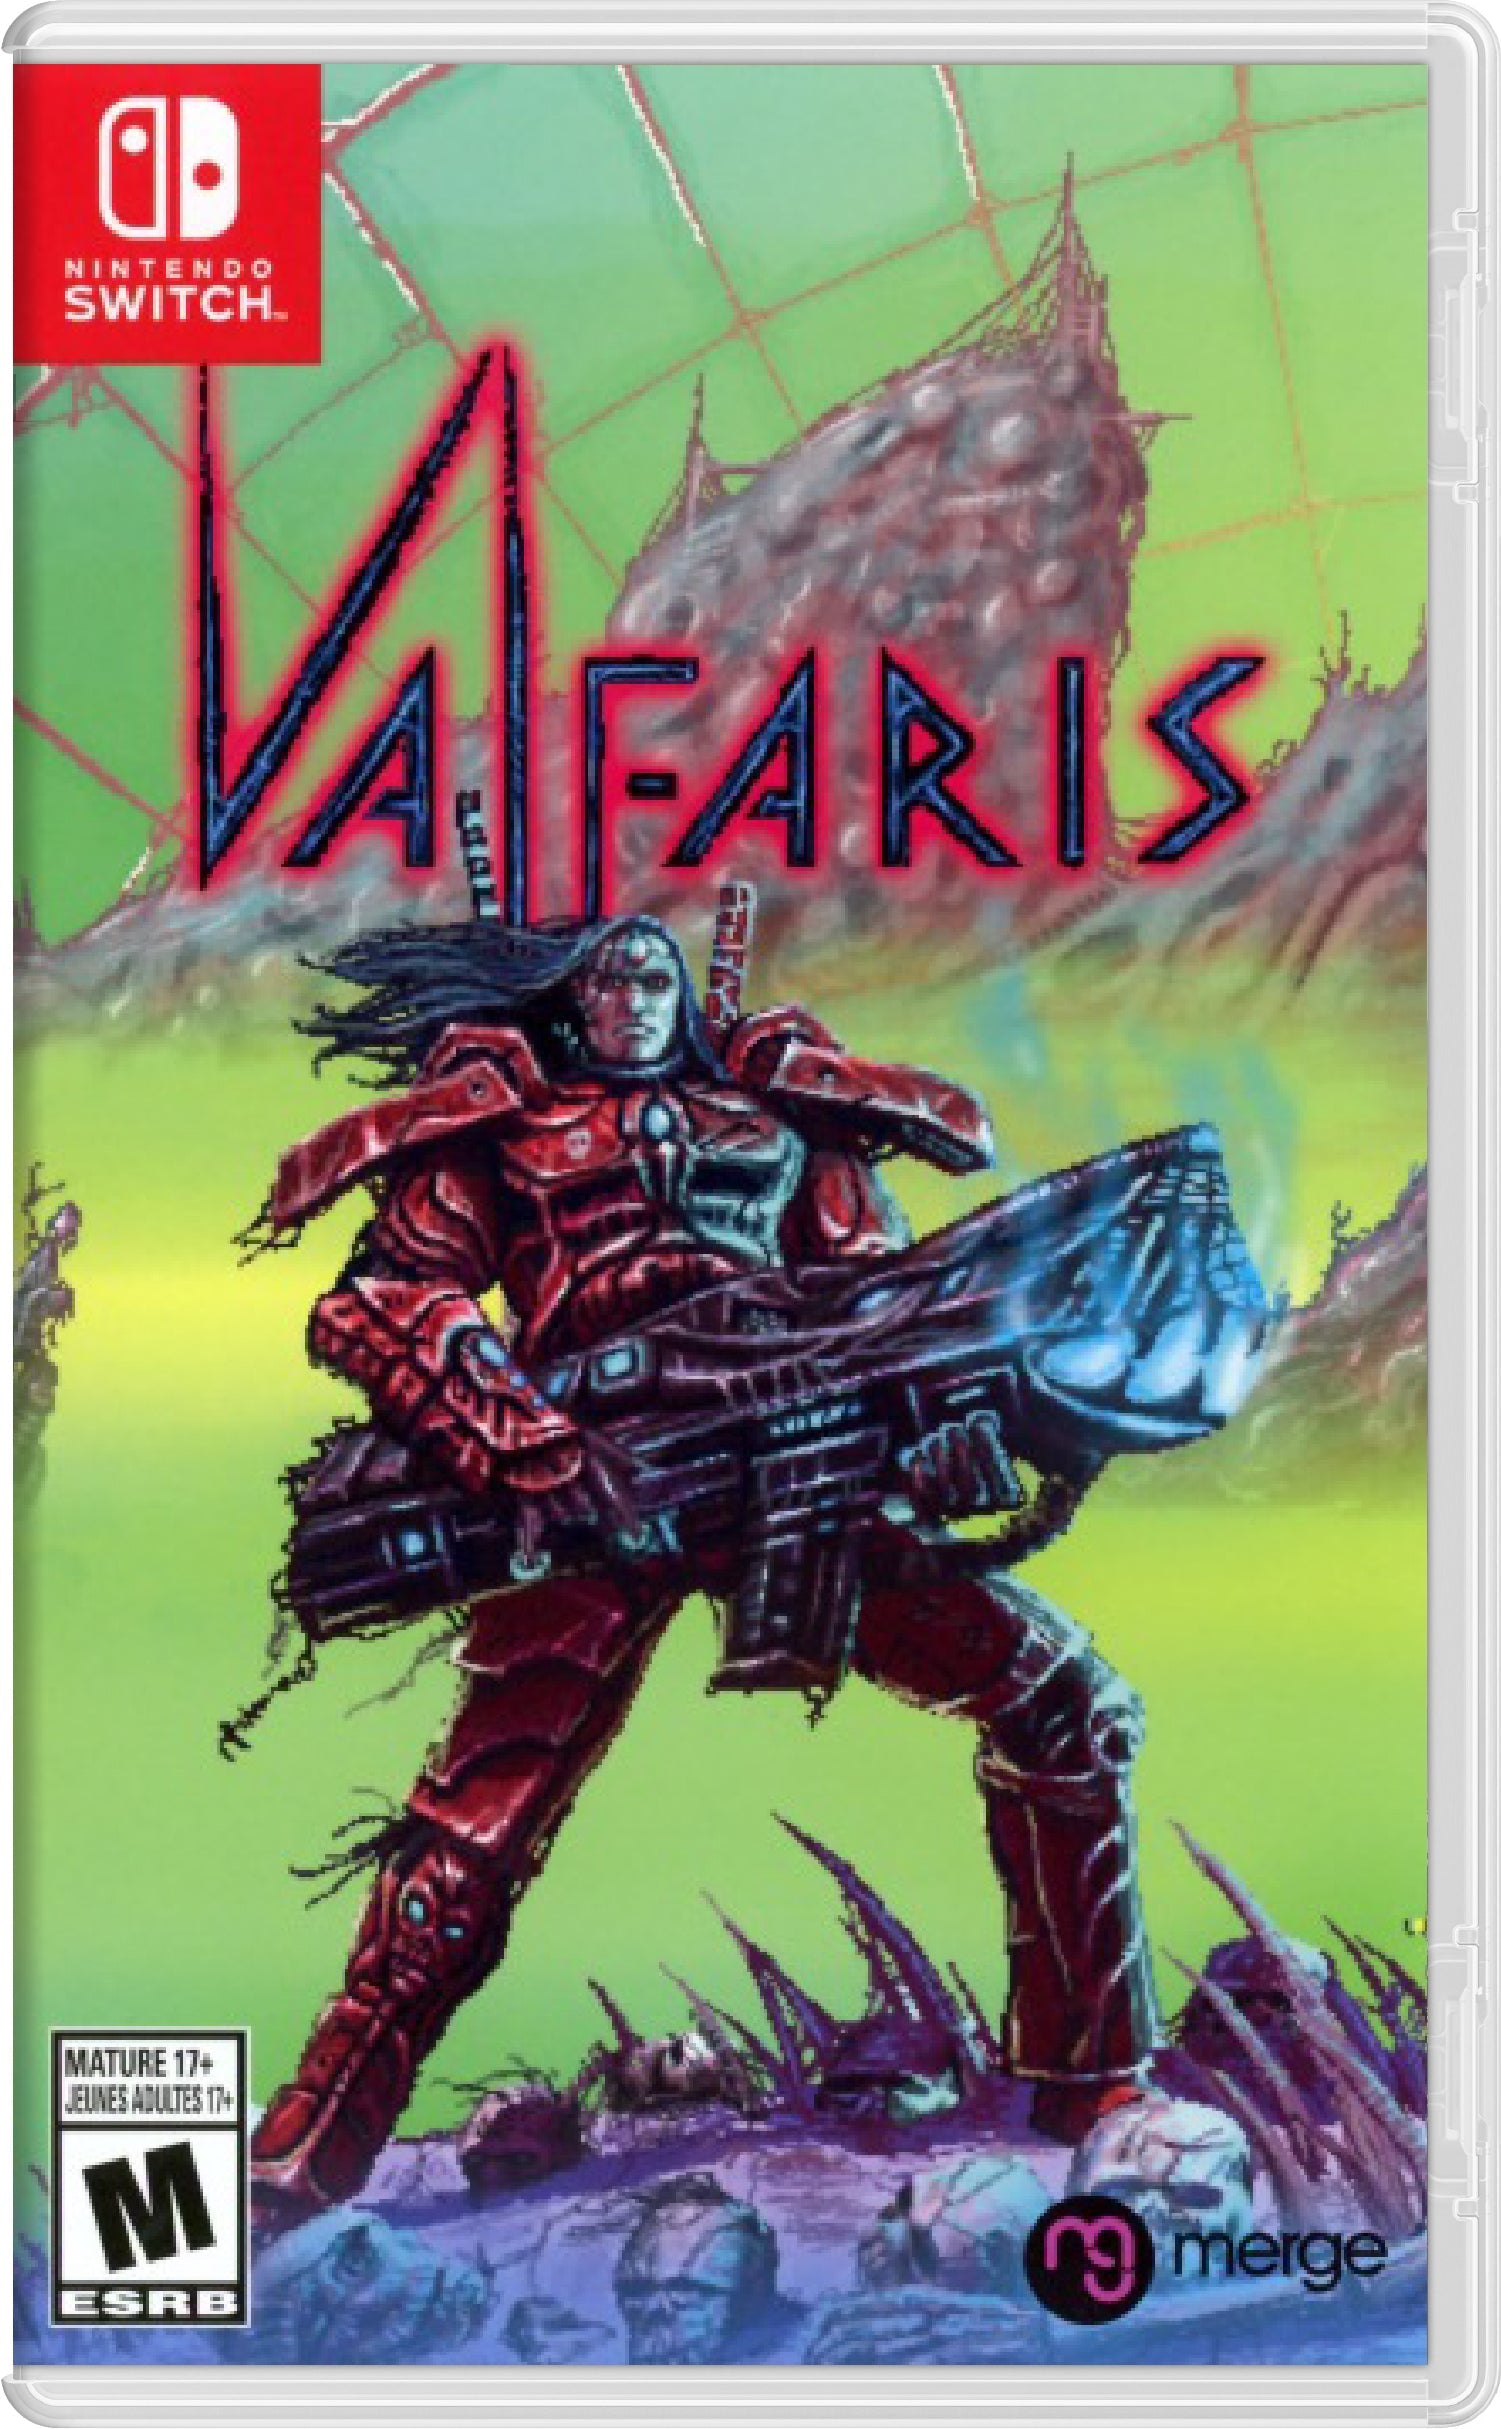 Valfaris Cover Art